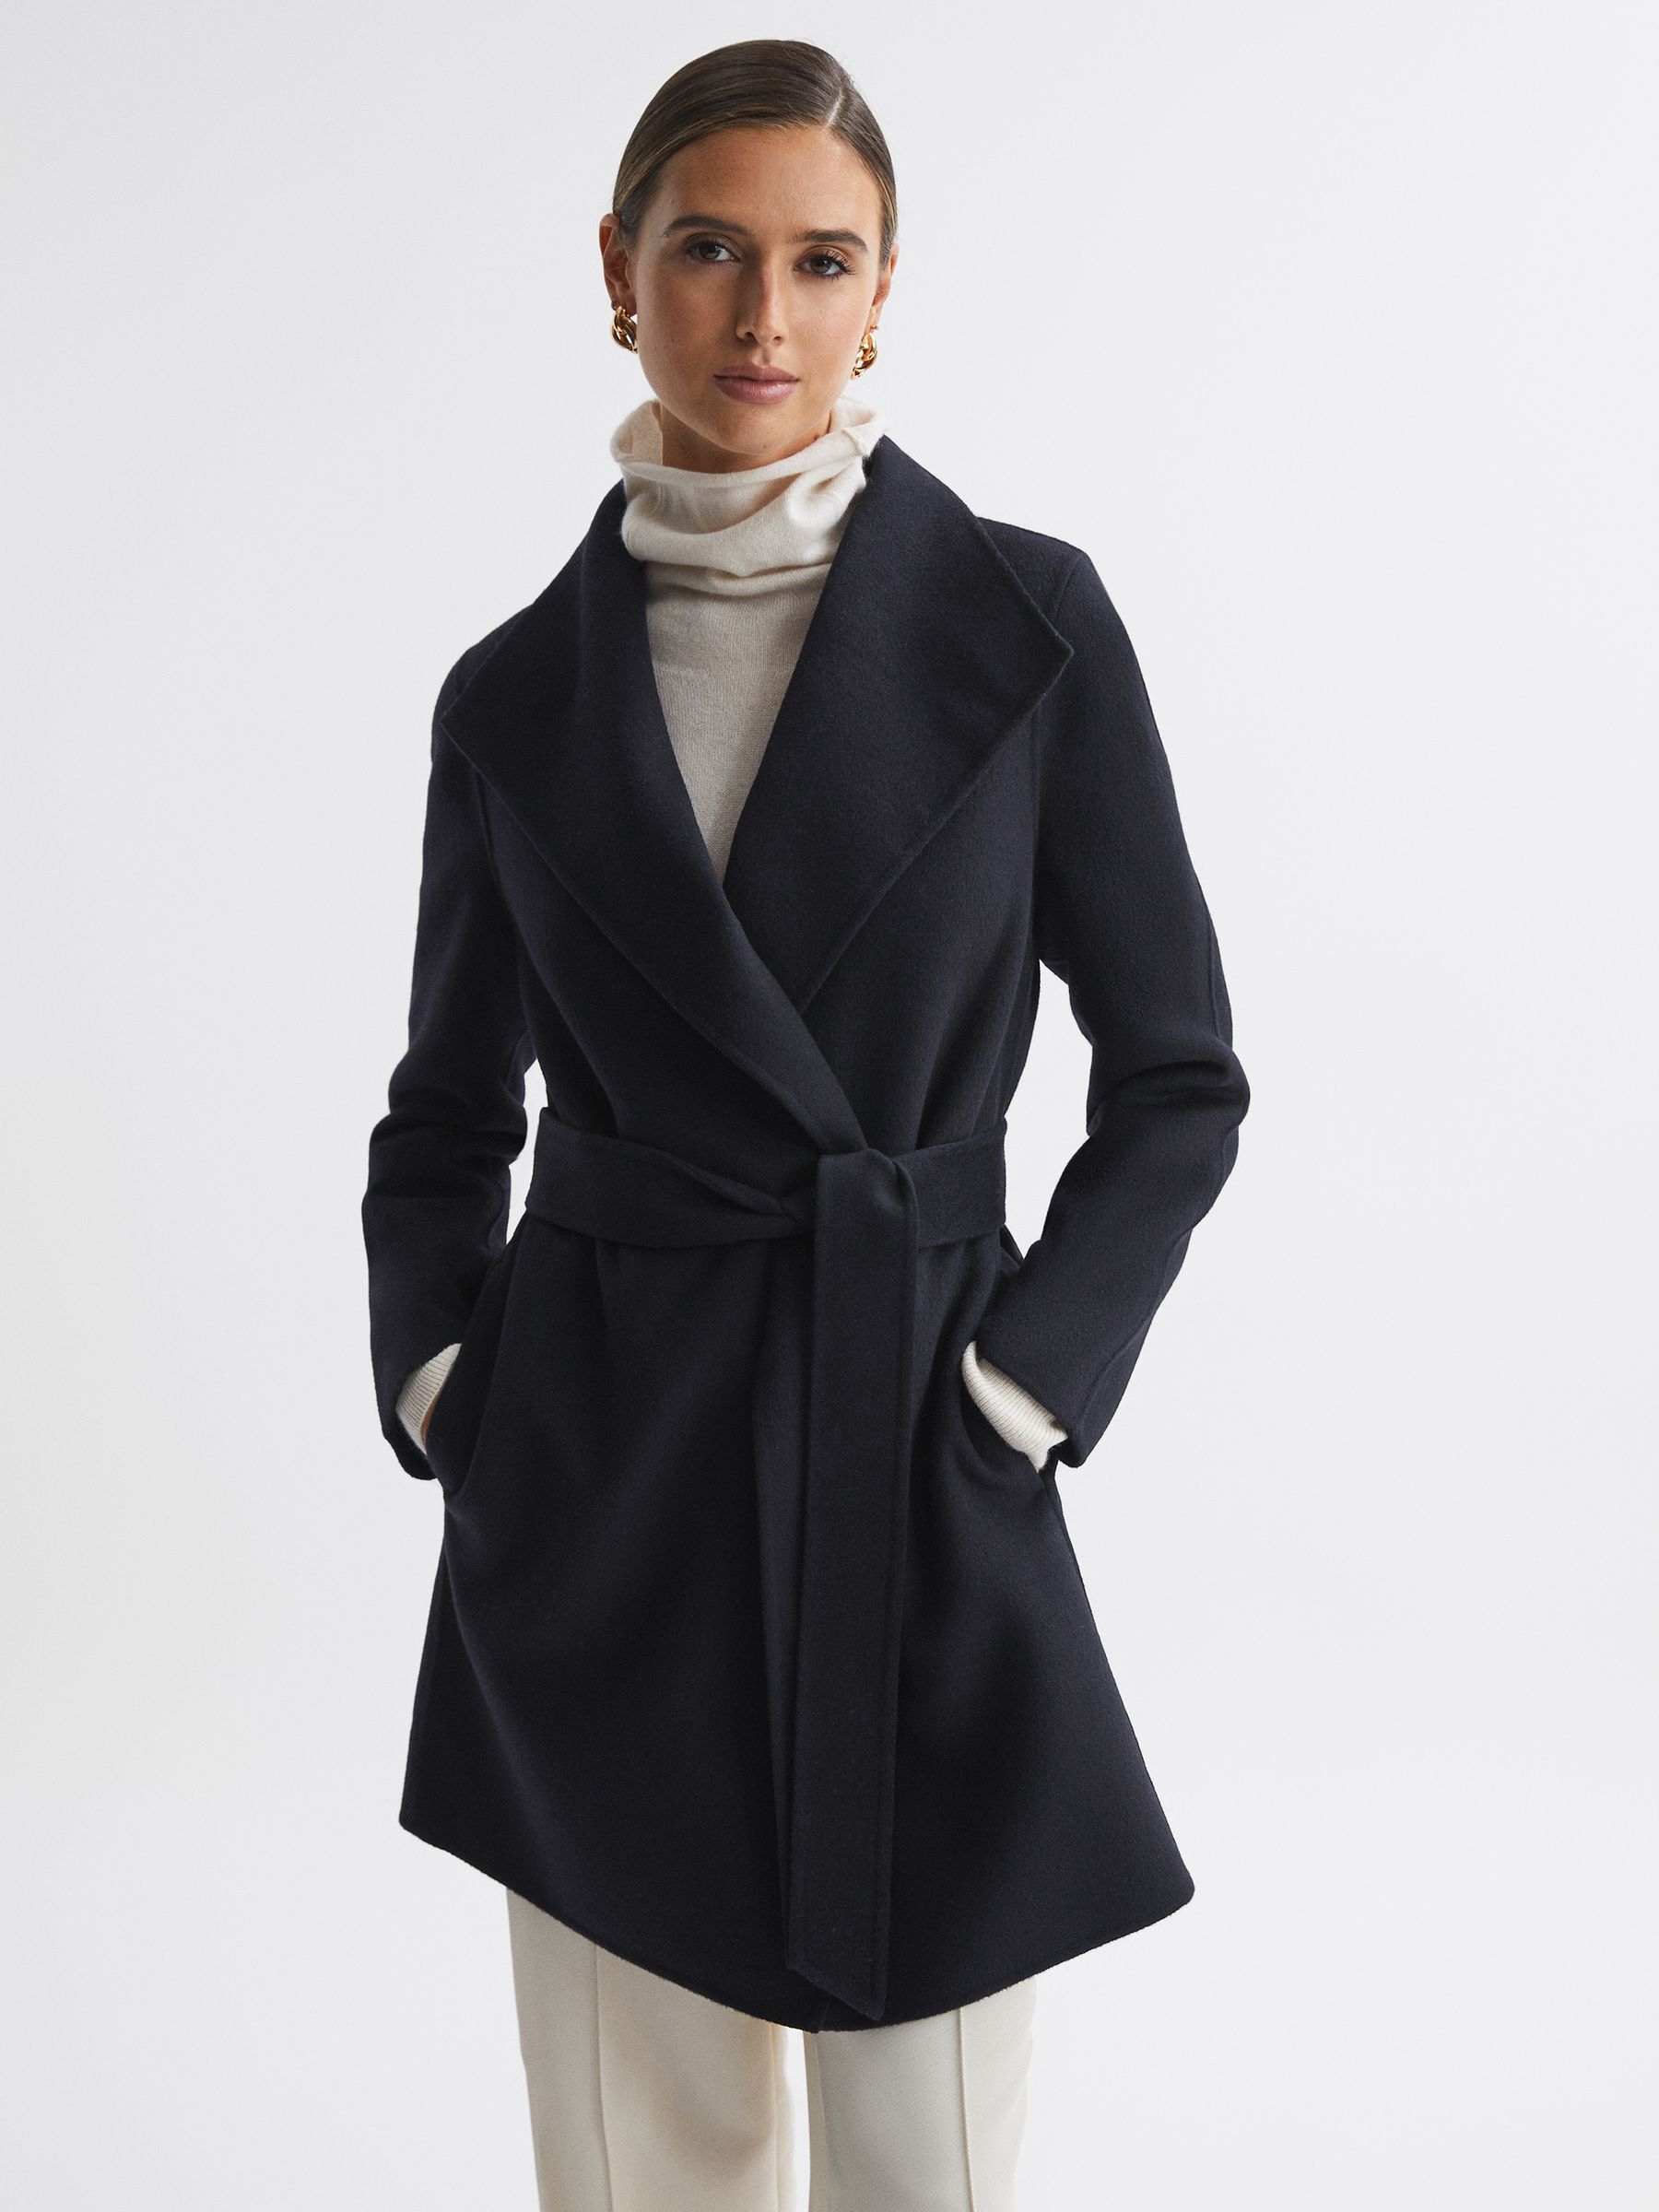 Reiss Mya Double Breasted Wool Blindseam Coat | REISS USA